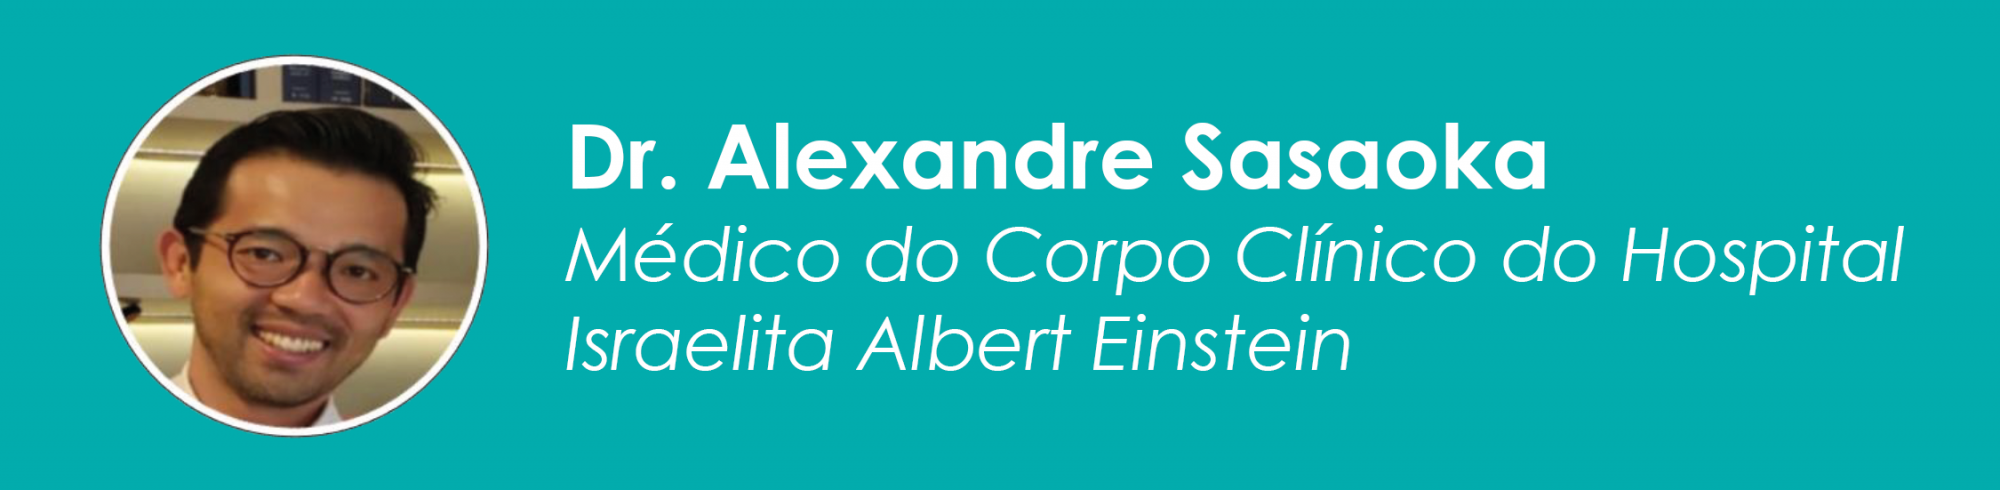 Dr Alexandre Sasaoka - Mdico do Corpo Clnico do Hospital Israelita Albert Einstein